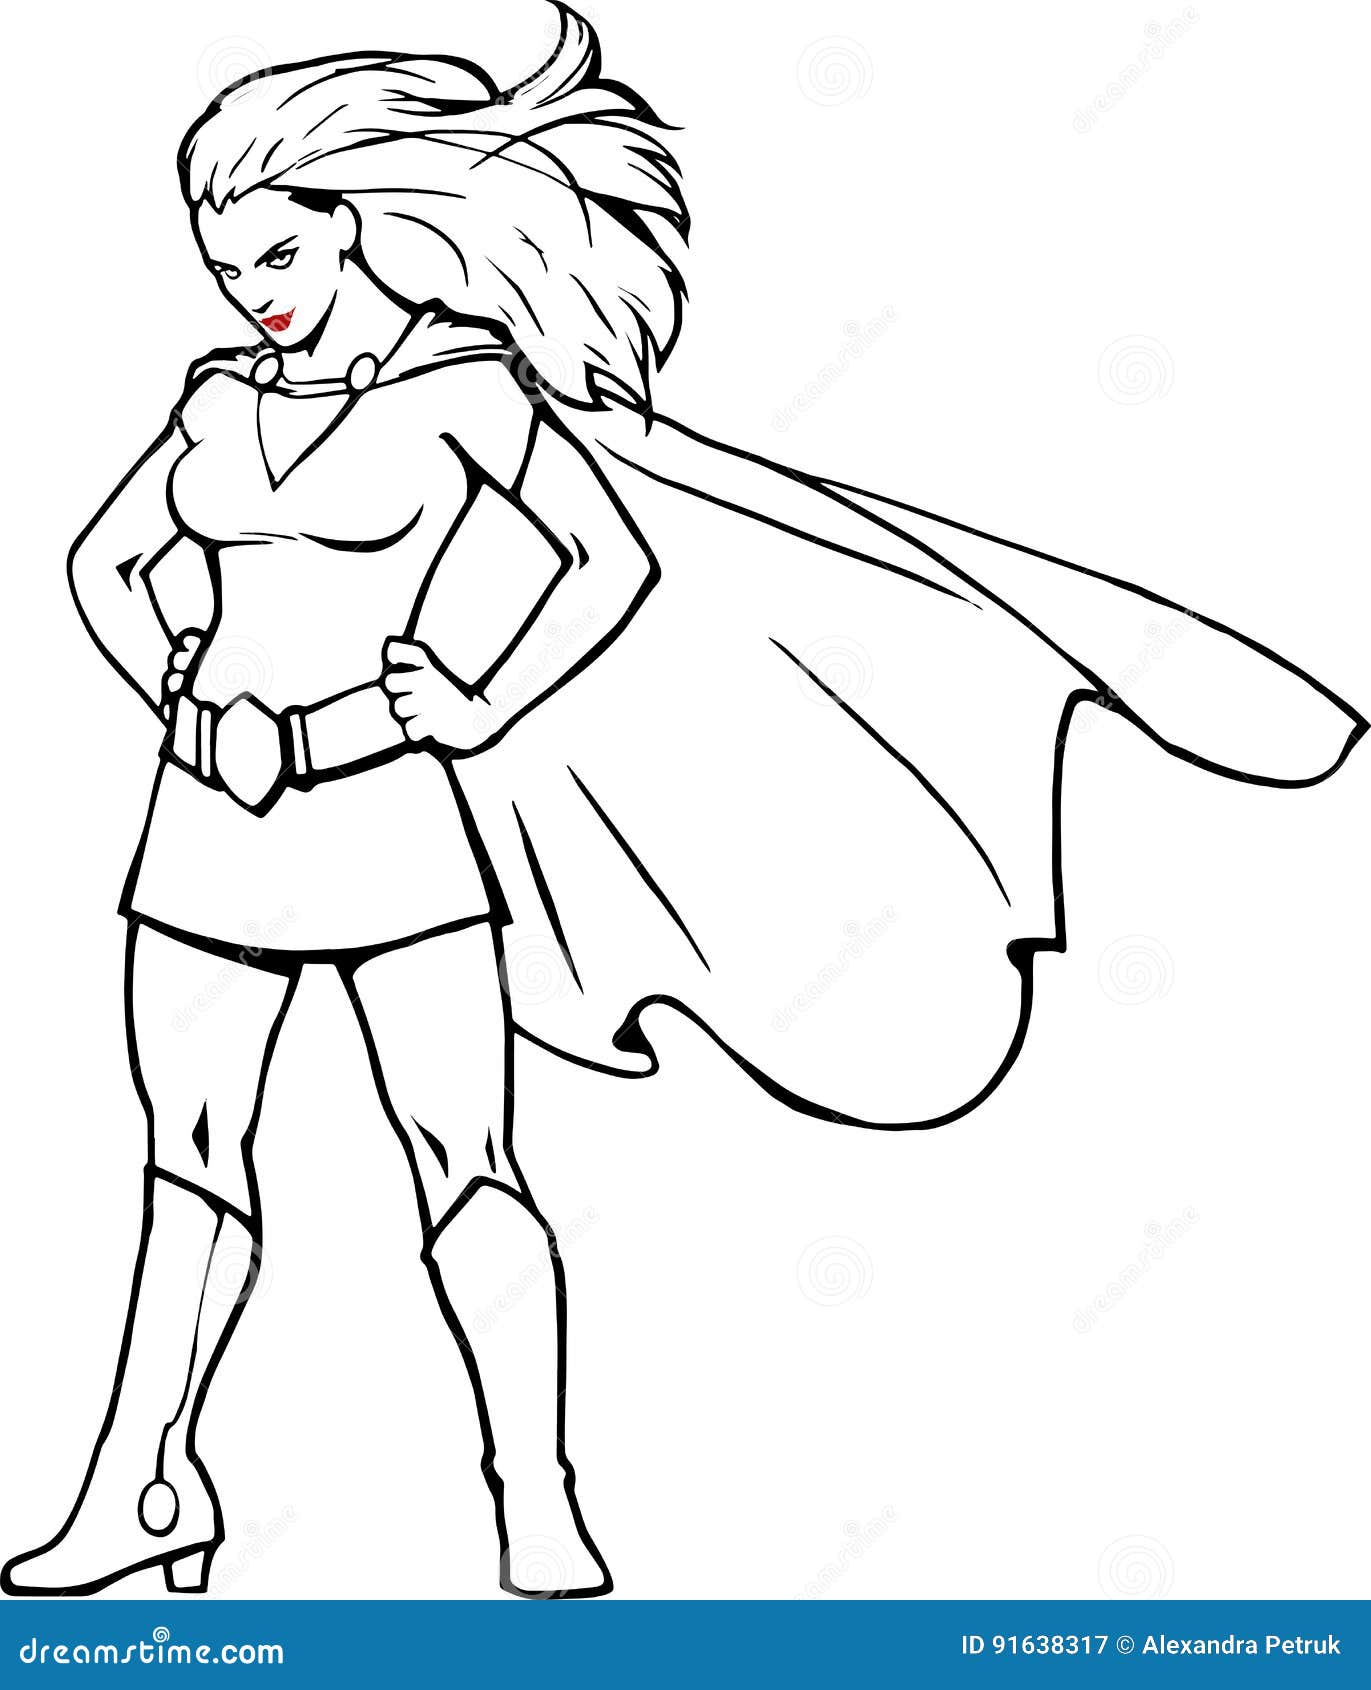 Cartoon strong woman stock vector. Illustration of woman - 91638317